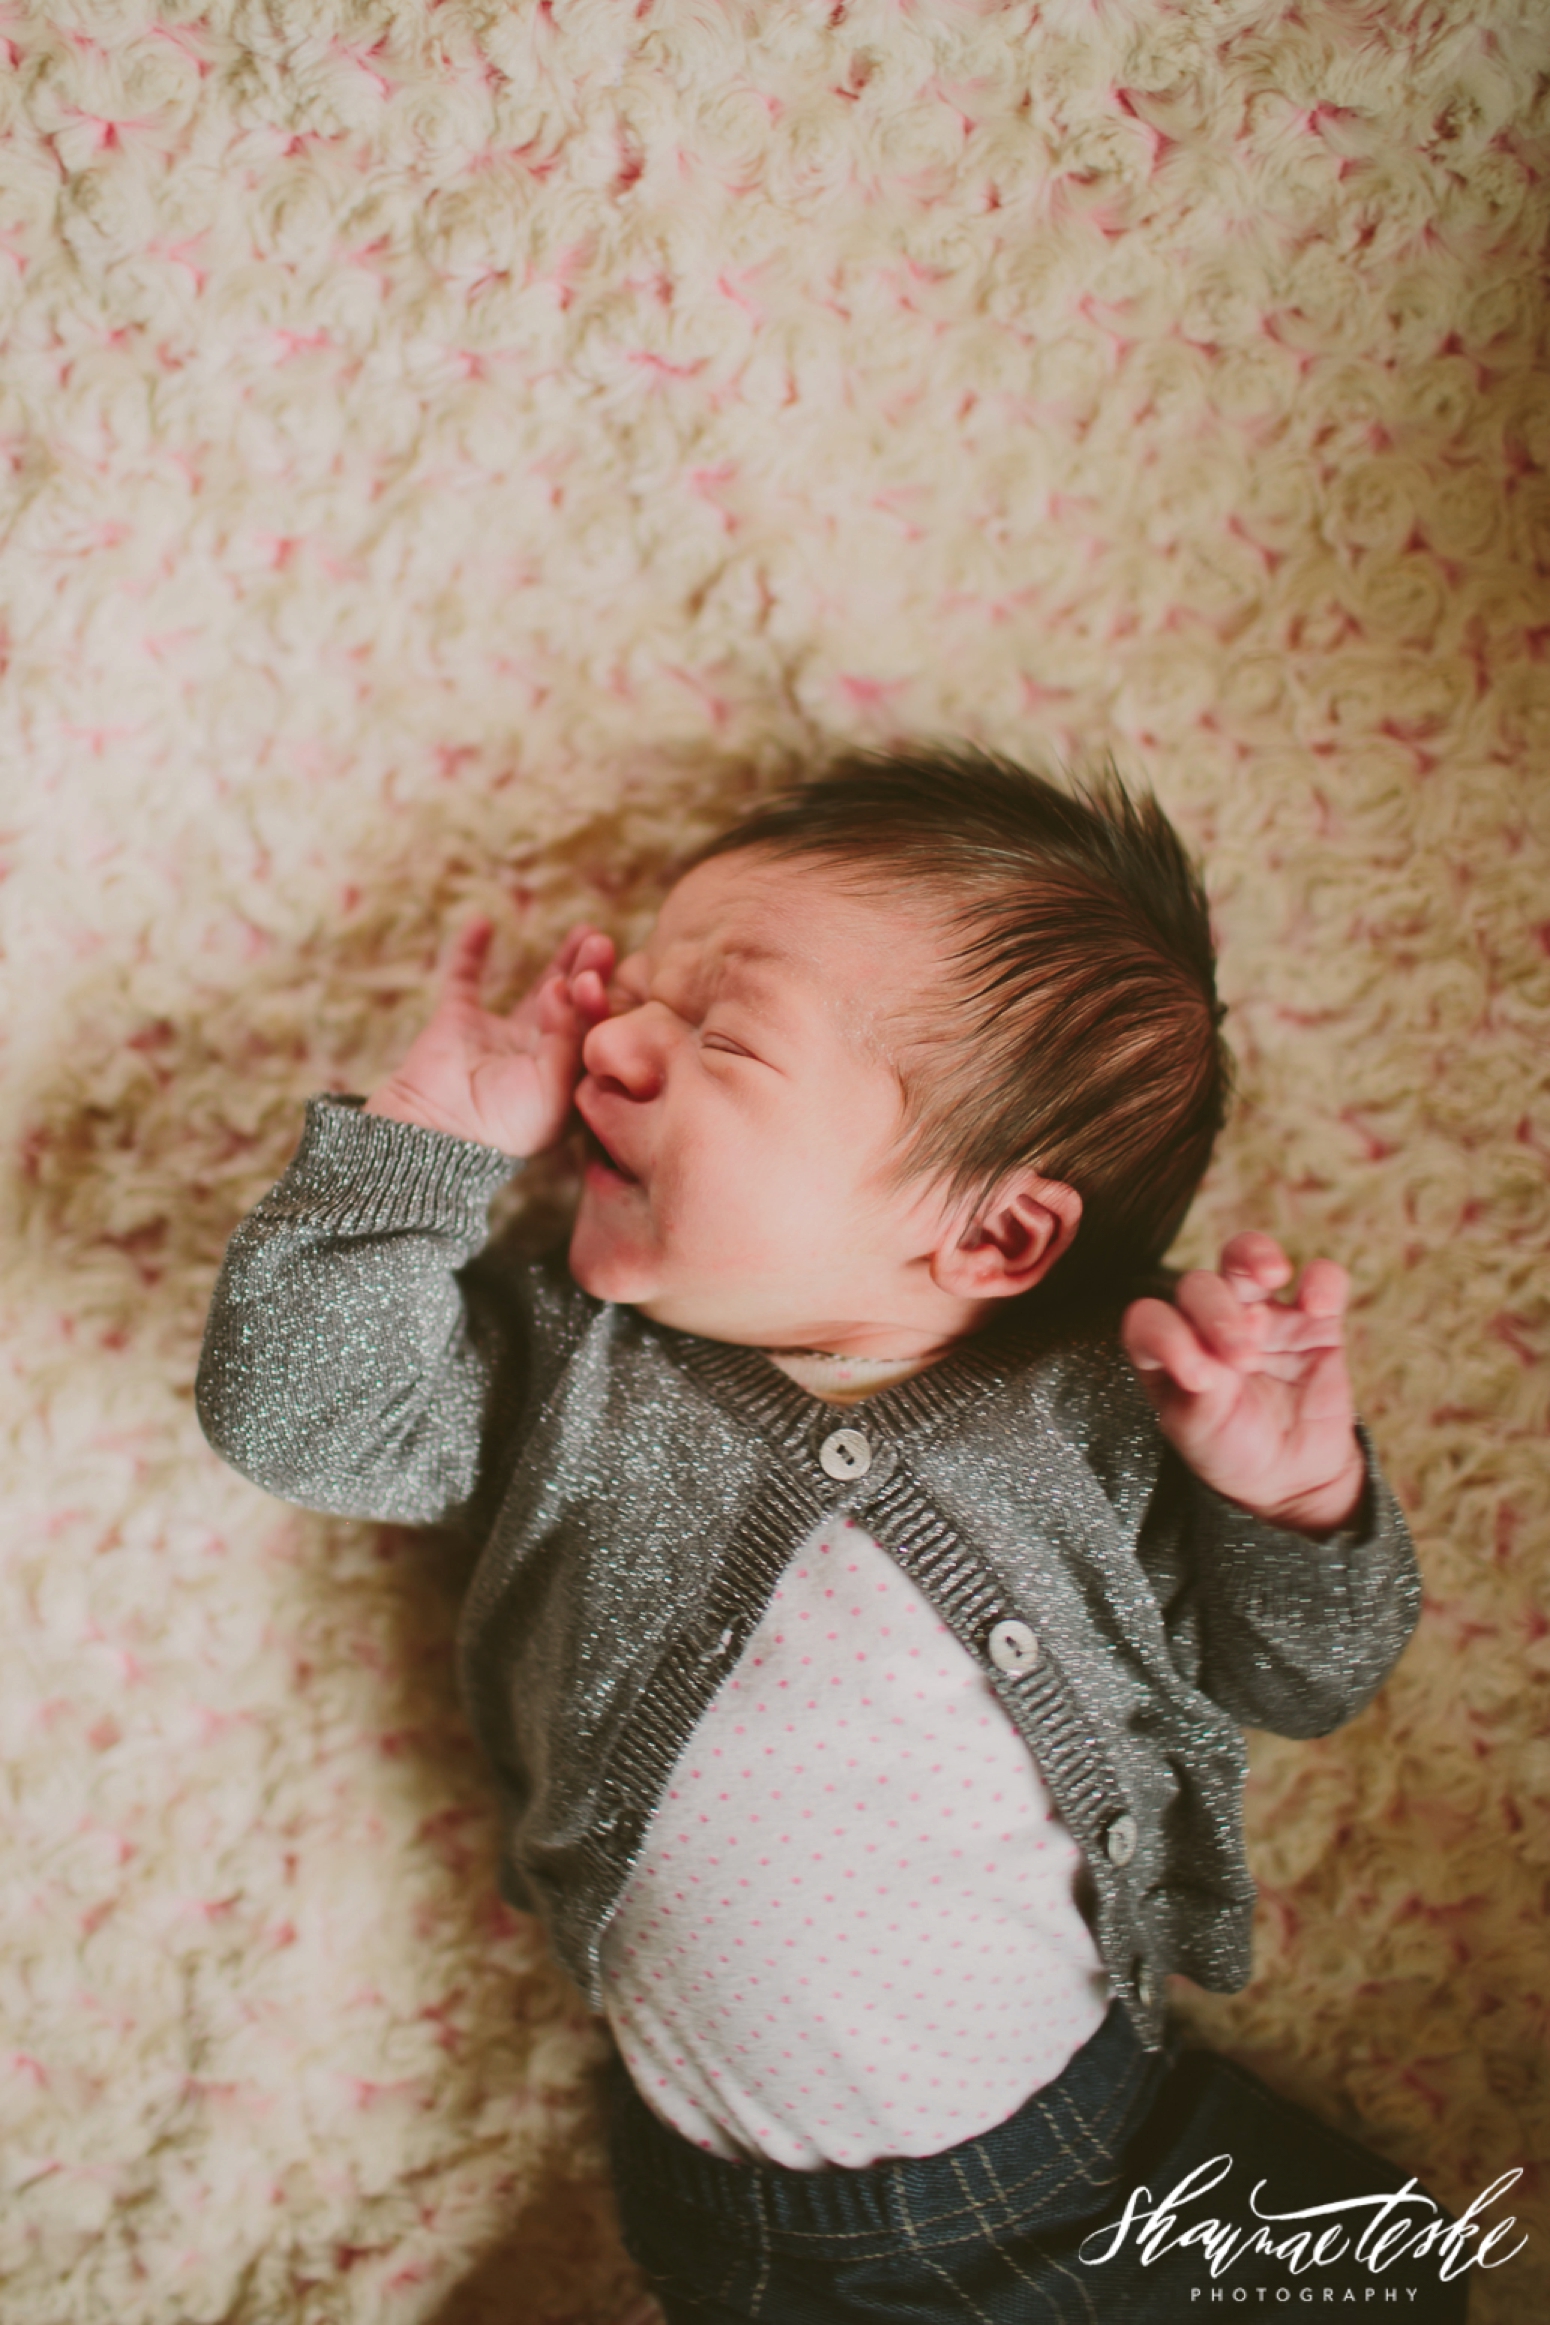 shaunae_teske_wisconsin_photographer_kinslee-newborn-18